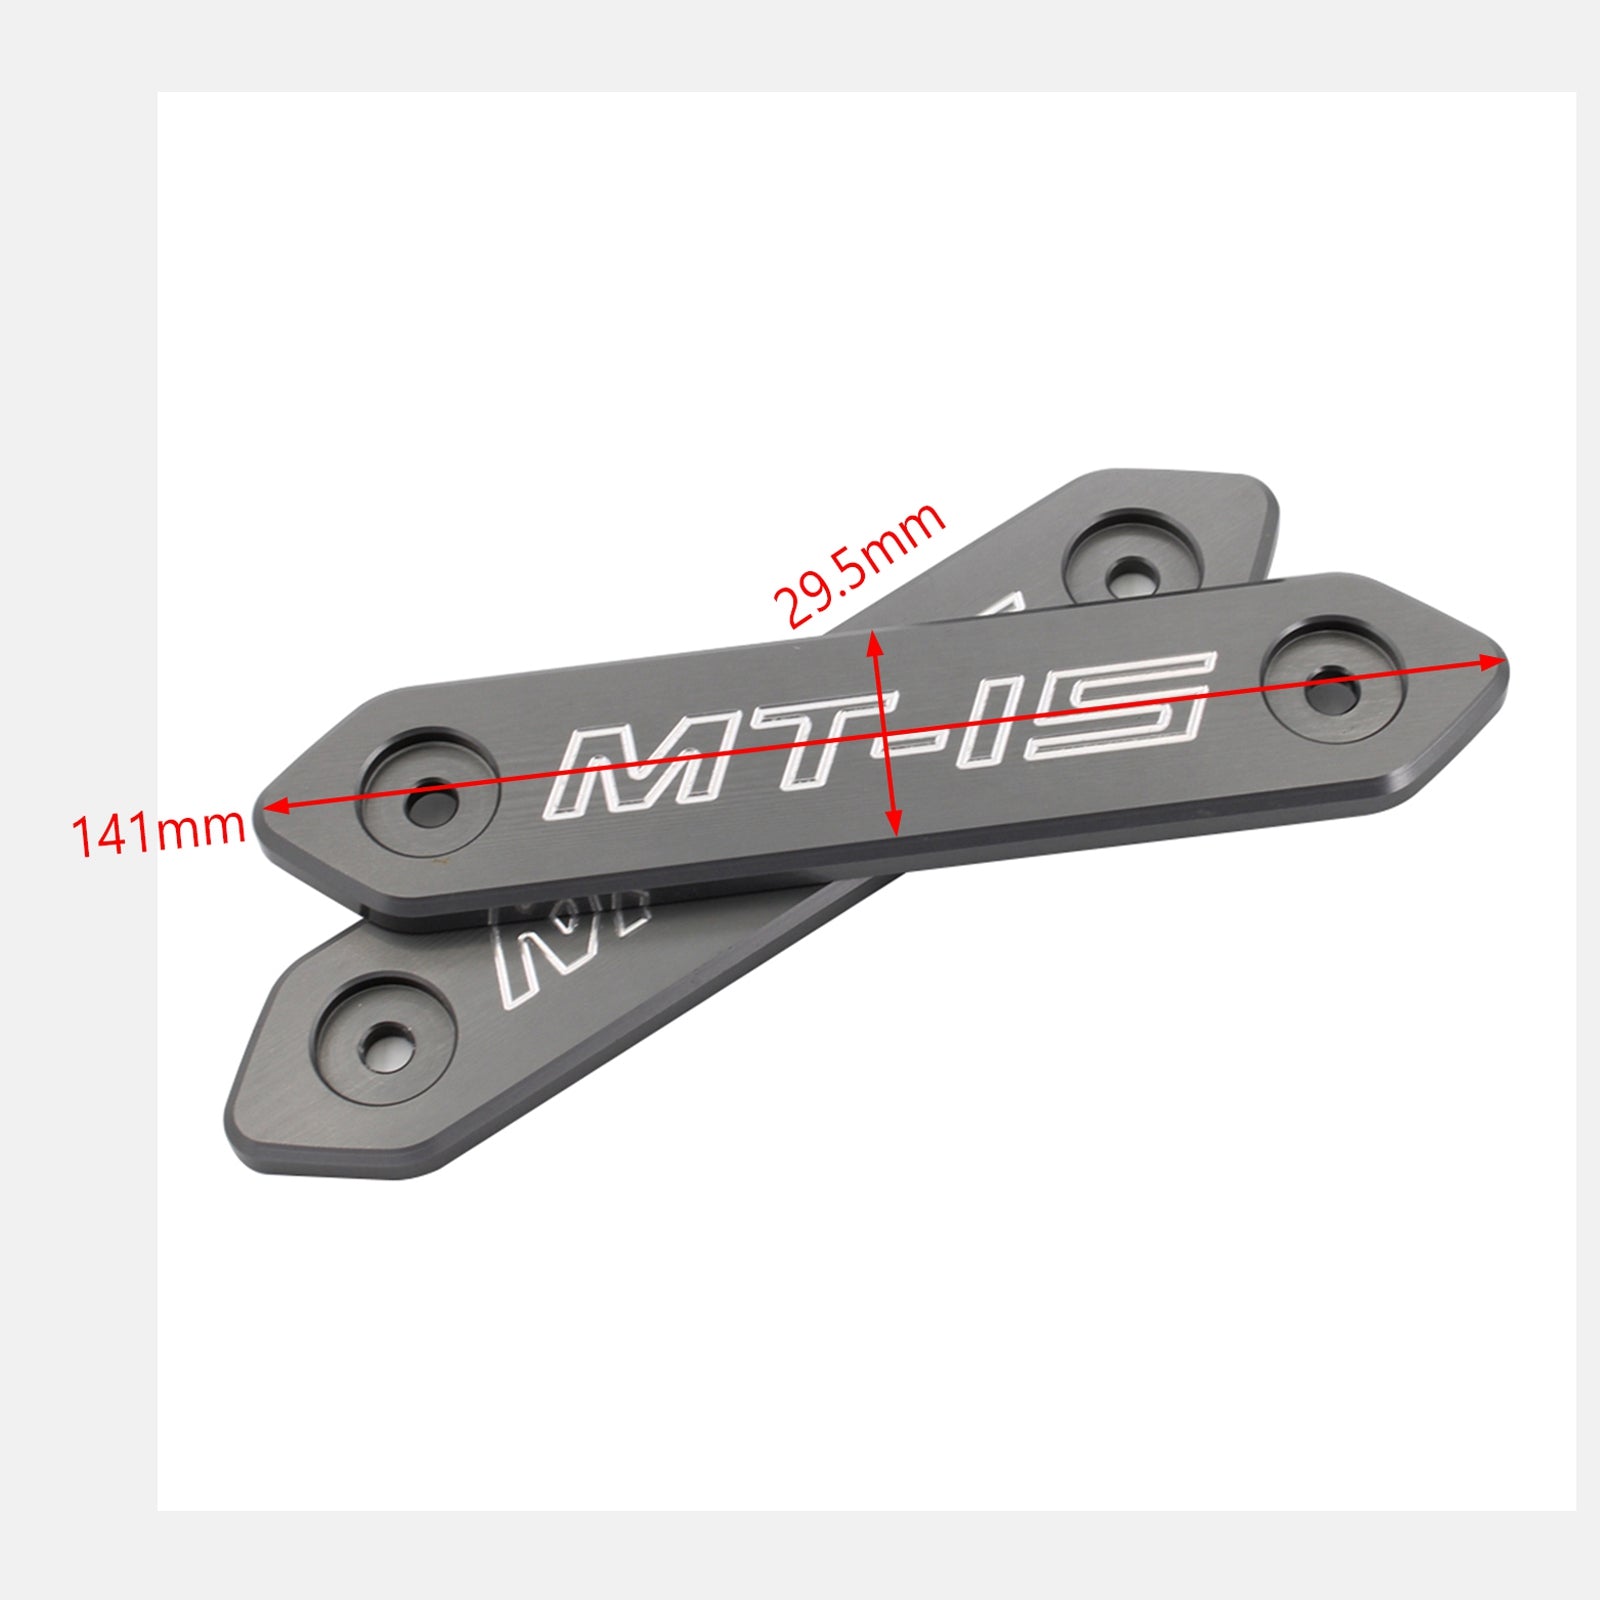 Aluminum Alloy Accessories Body Cover For Yamaha MT 15 MT-15 MT15 2018-2020 Generic